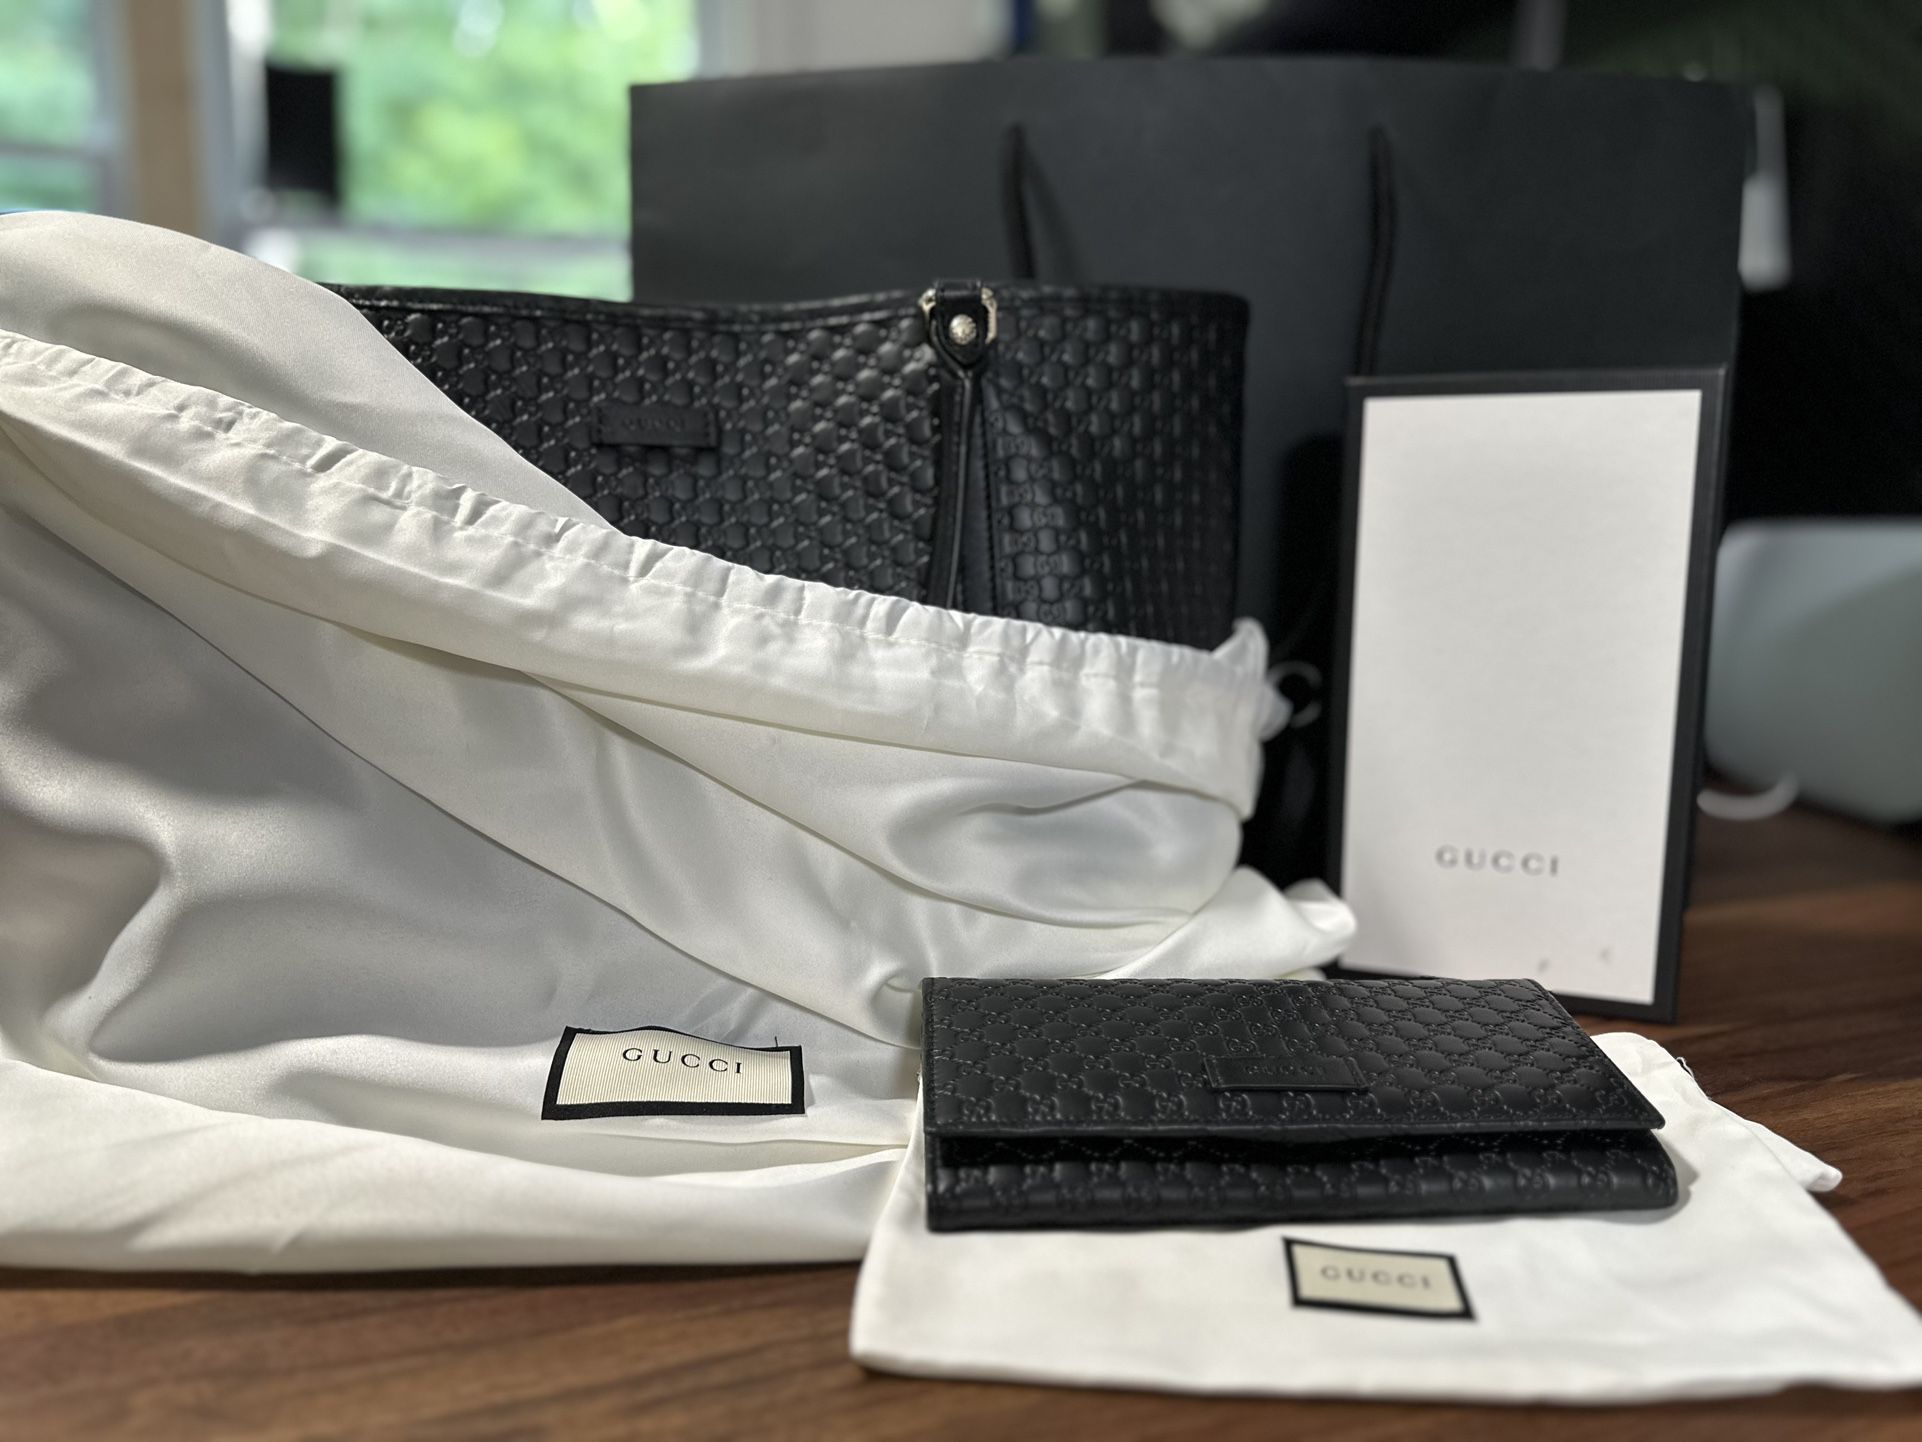 Gucci Guccissima Purse And Wallet Set